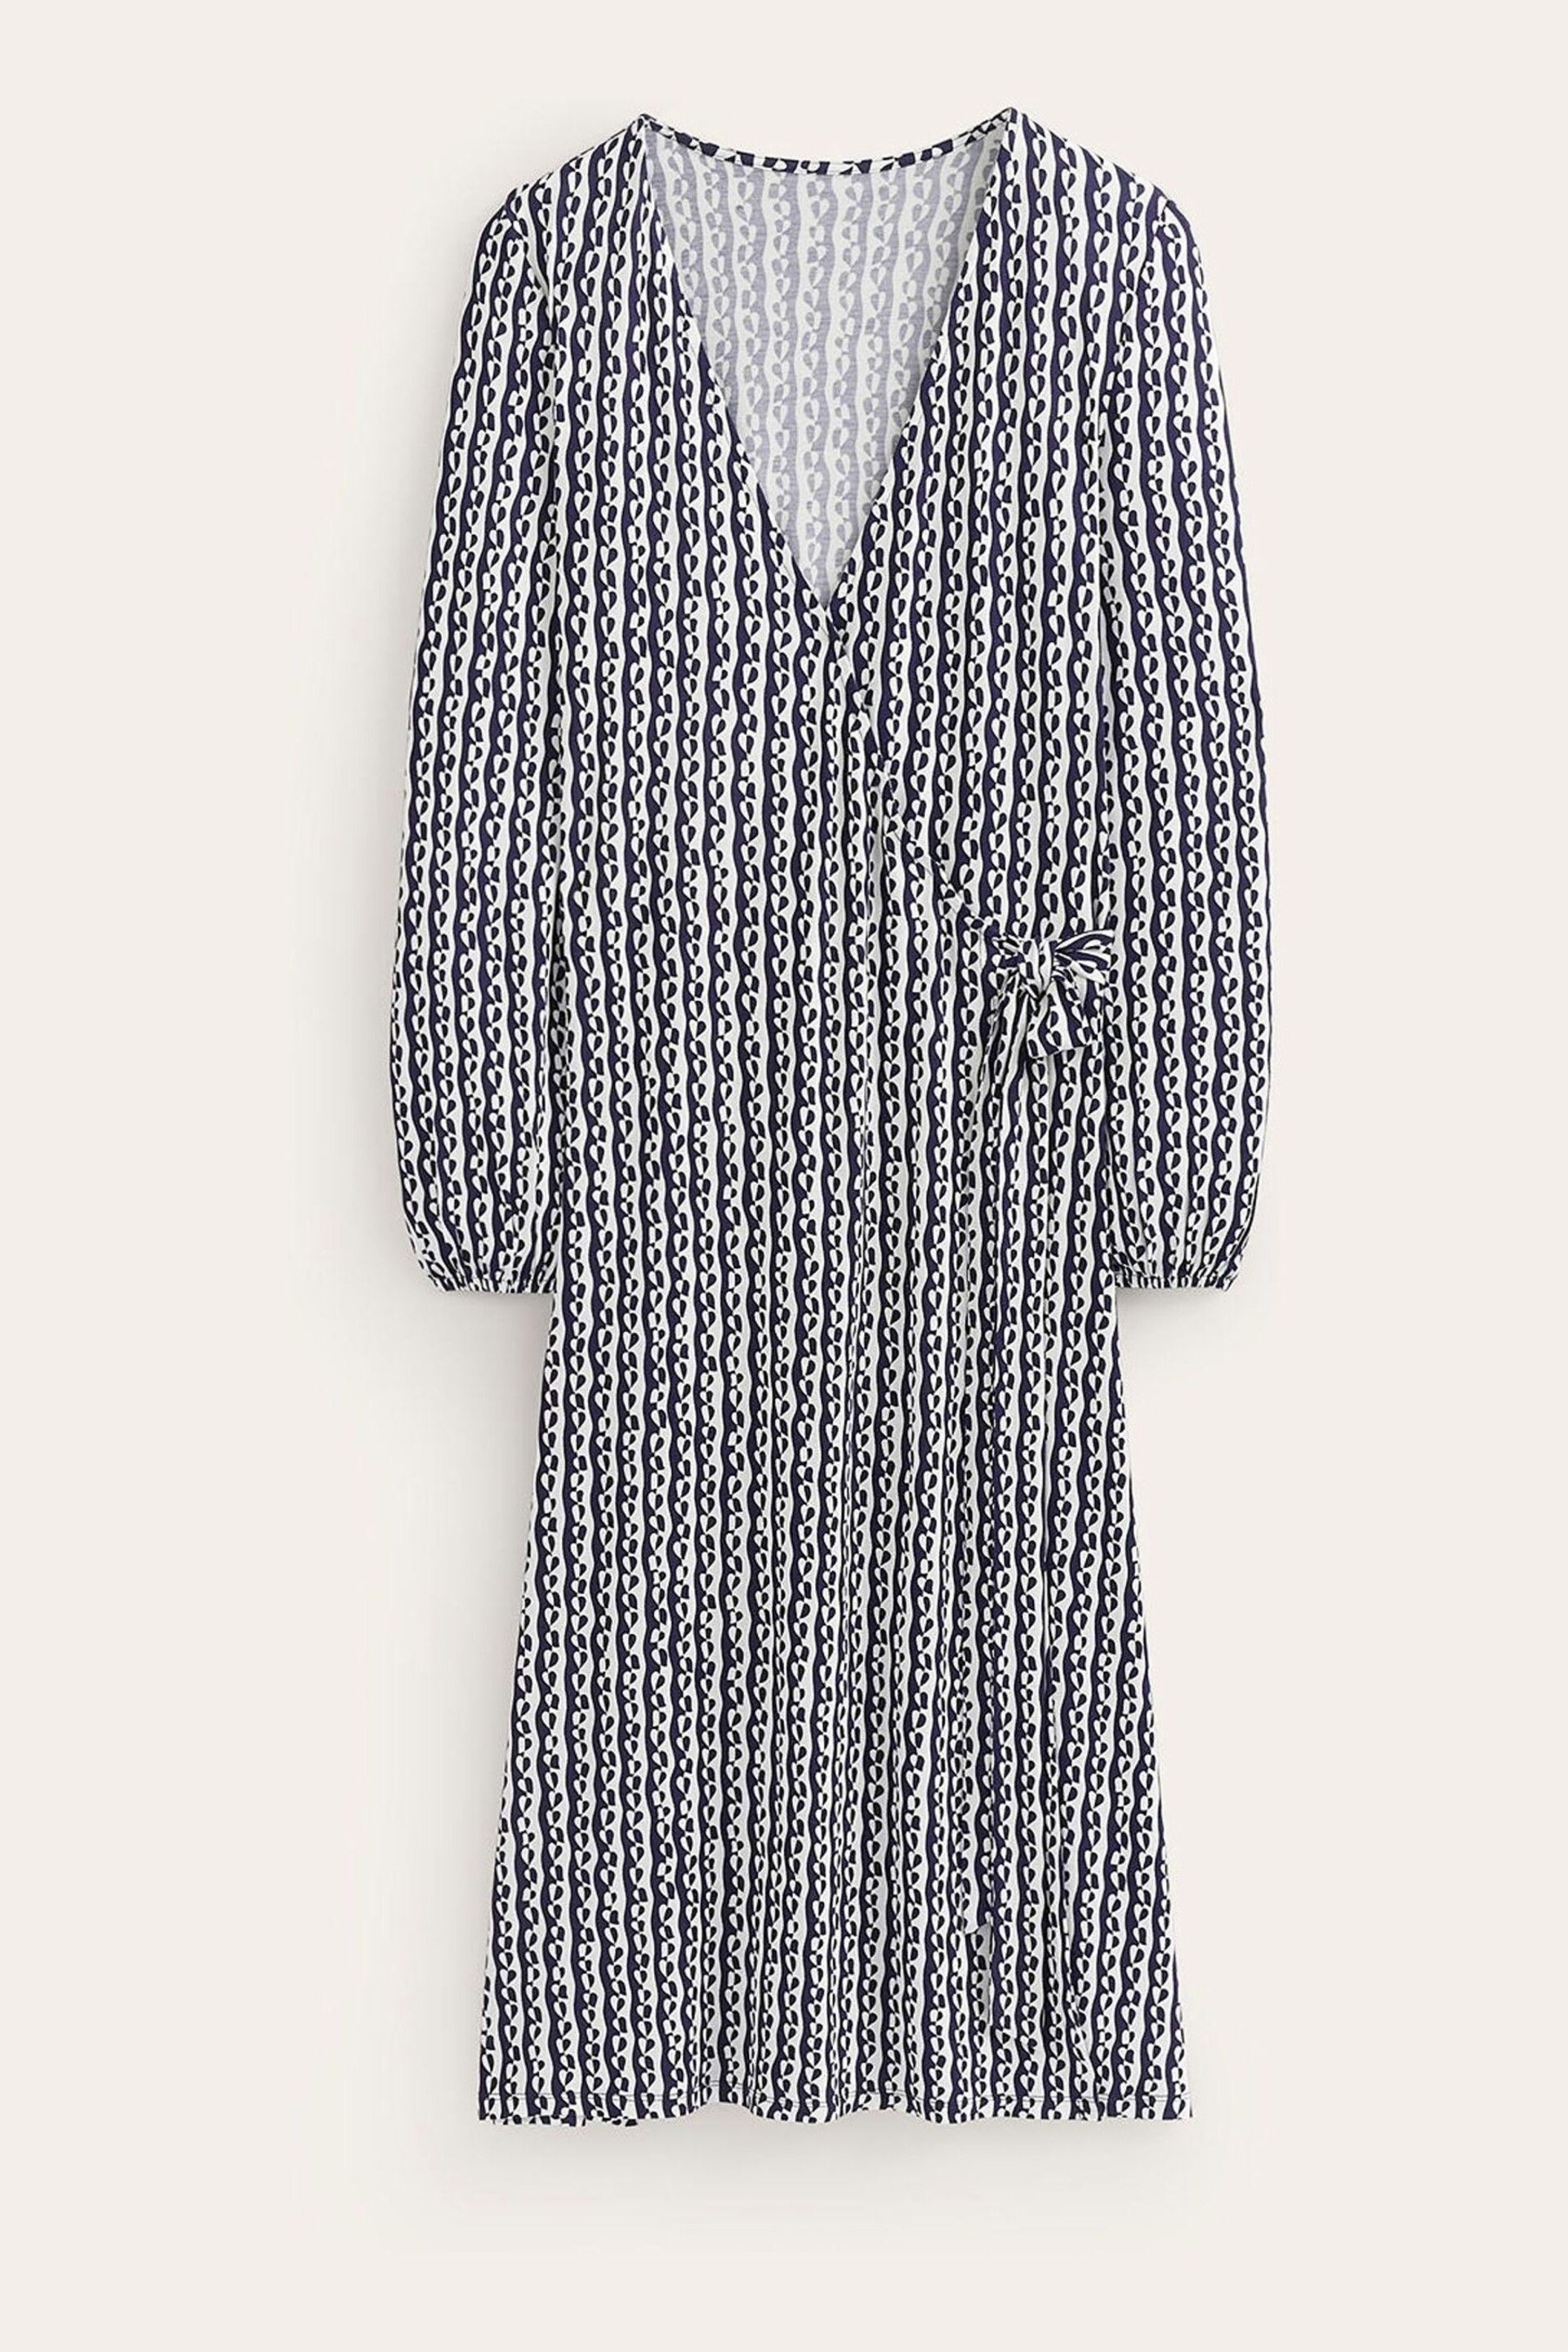 Boden Blue Joanna Jersey Midi Wrap Dress - Image 5 of 5